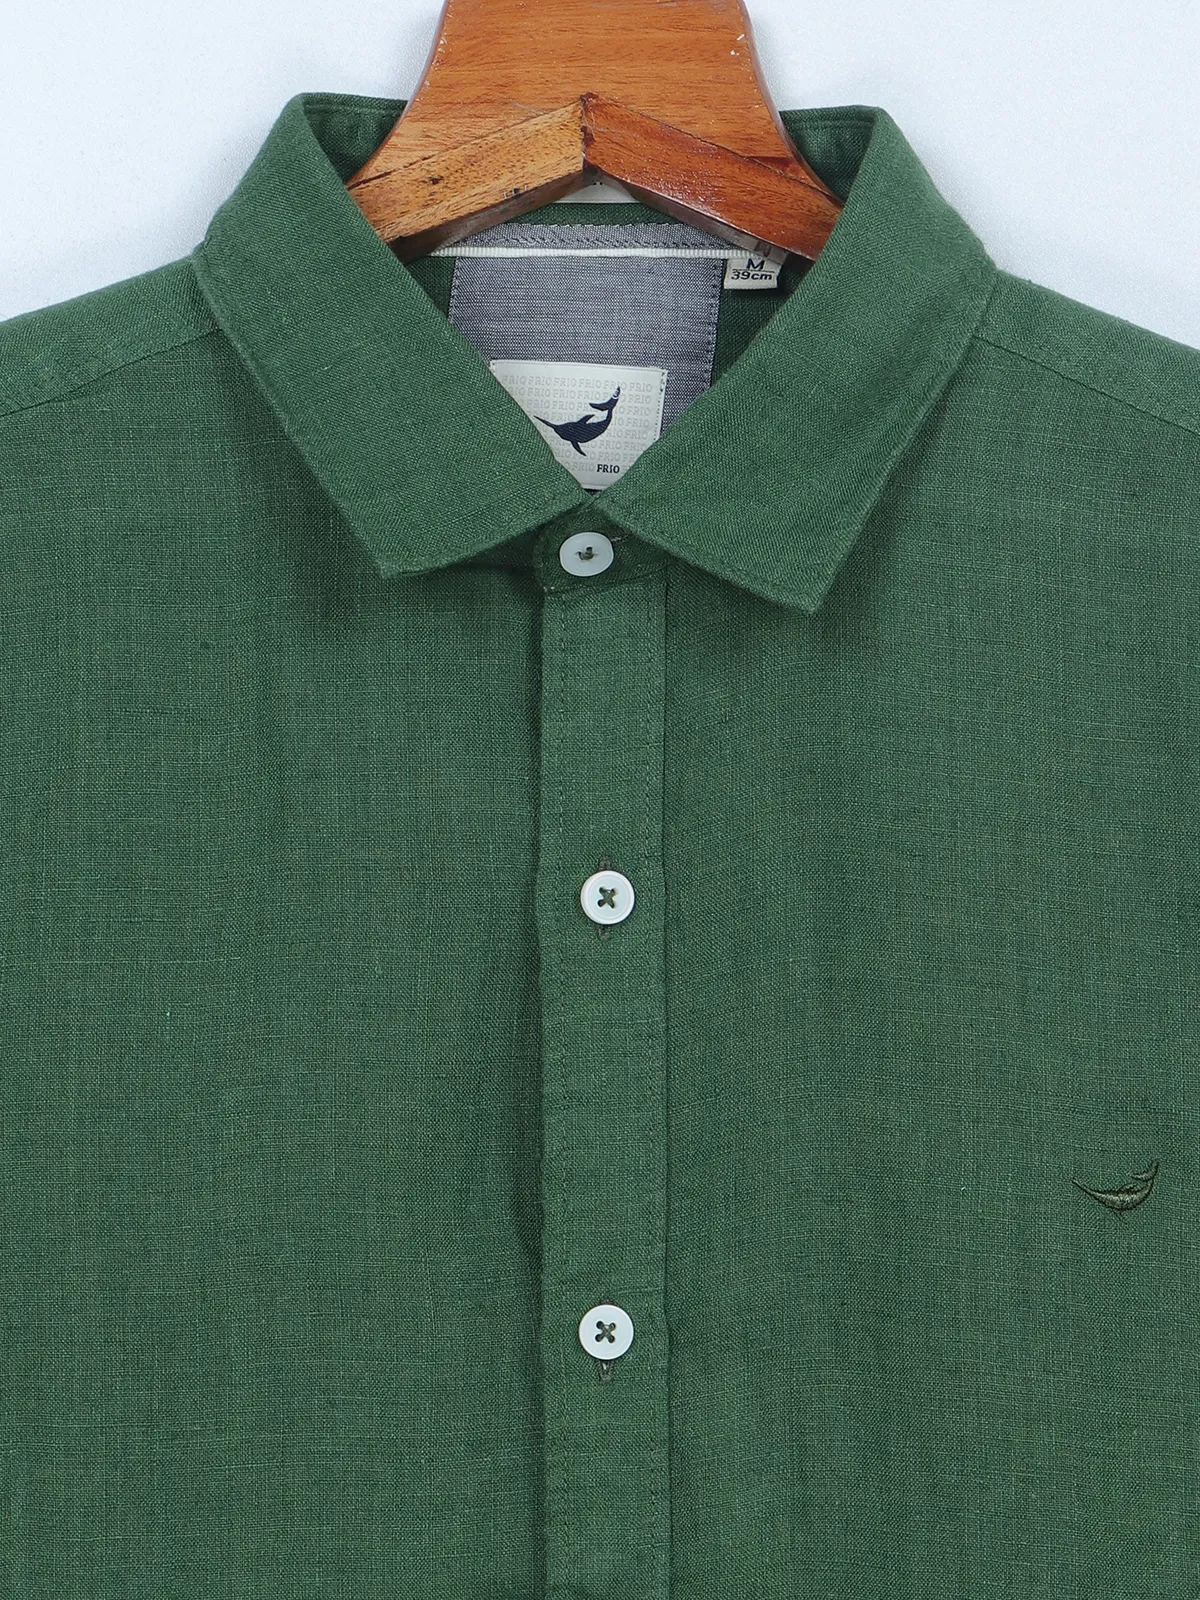 Frio linen dark green half sleeves shirt